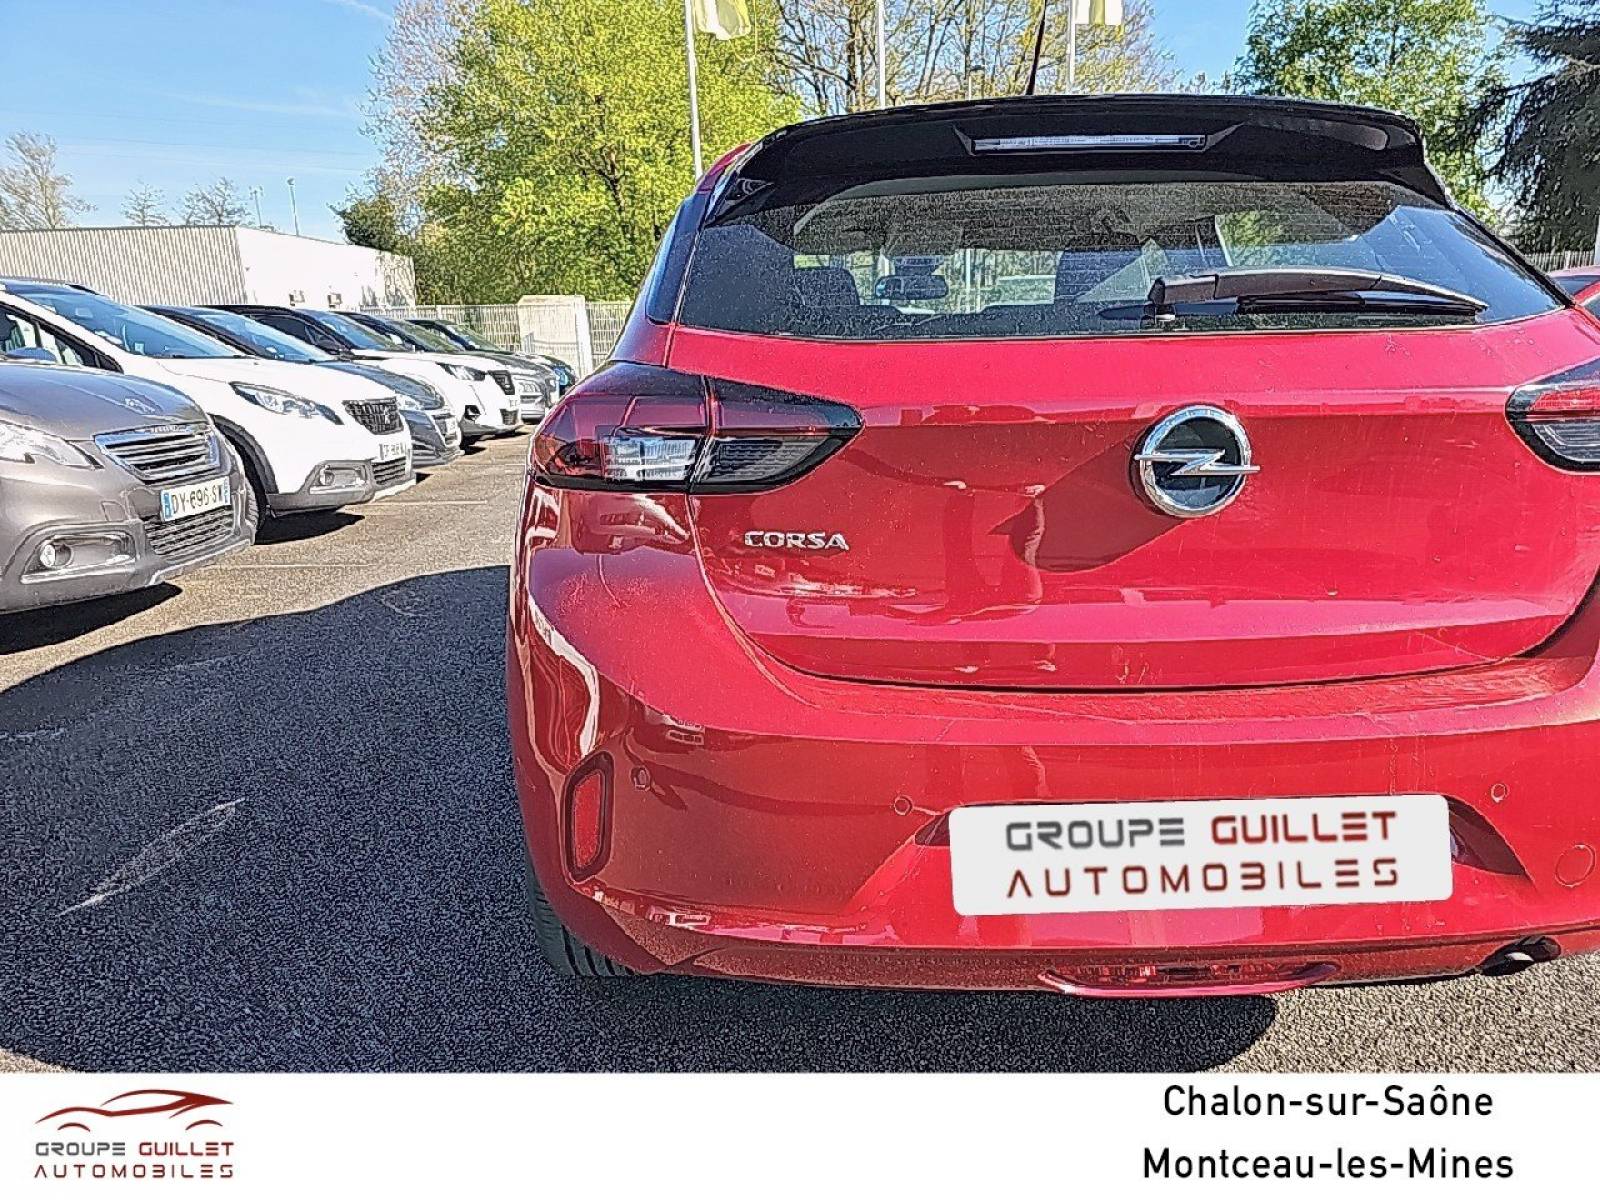 OPEL Corsa 1.2 75 ch BVM5 - véhicule d'occasion - Groupe Guillet - Opel Magicauto Chalon - 71380 - Saint-Marcel - 17